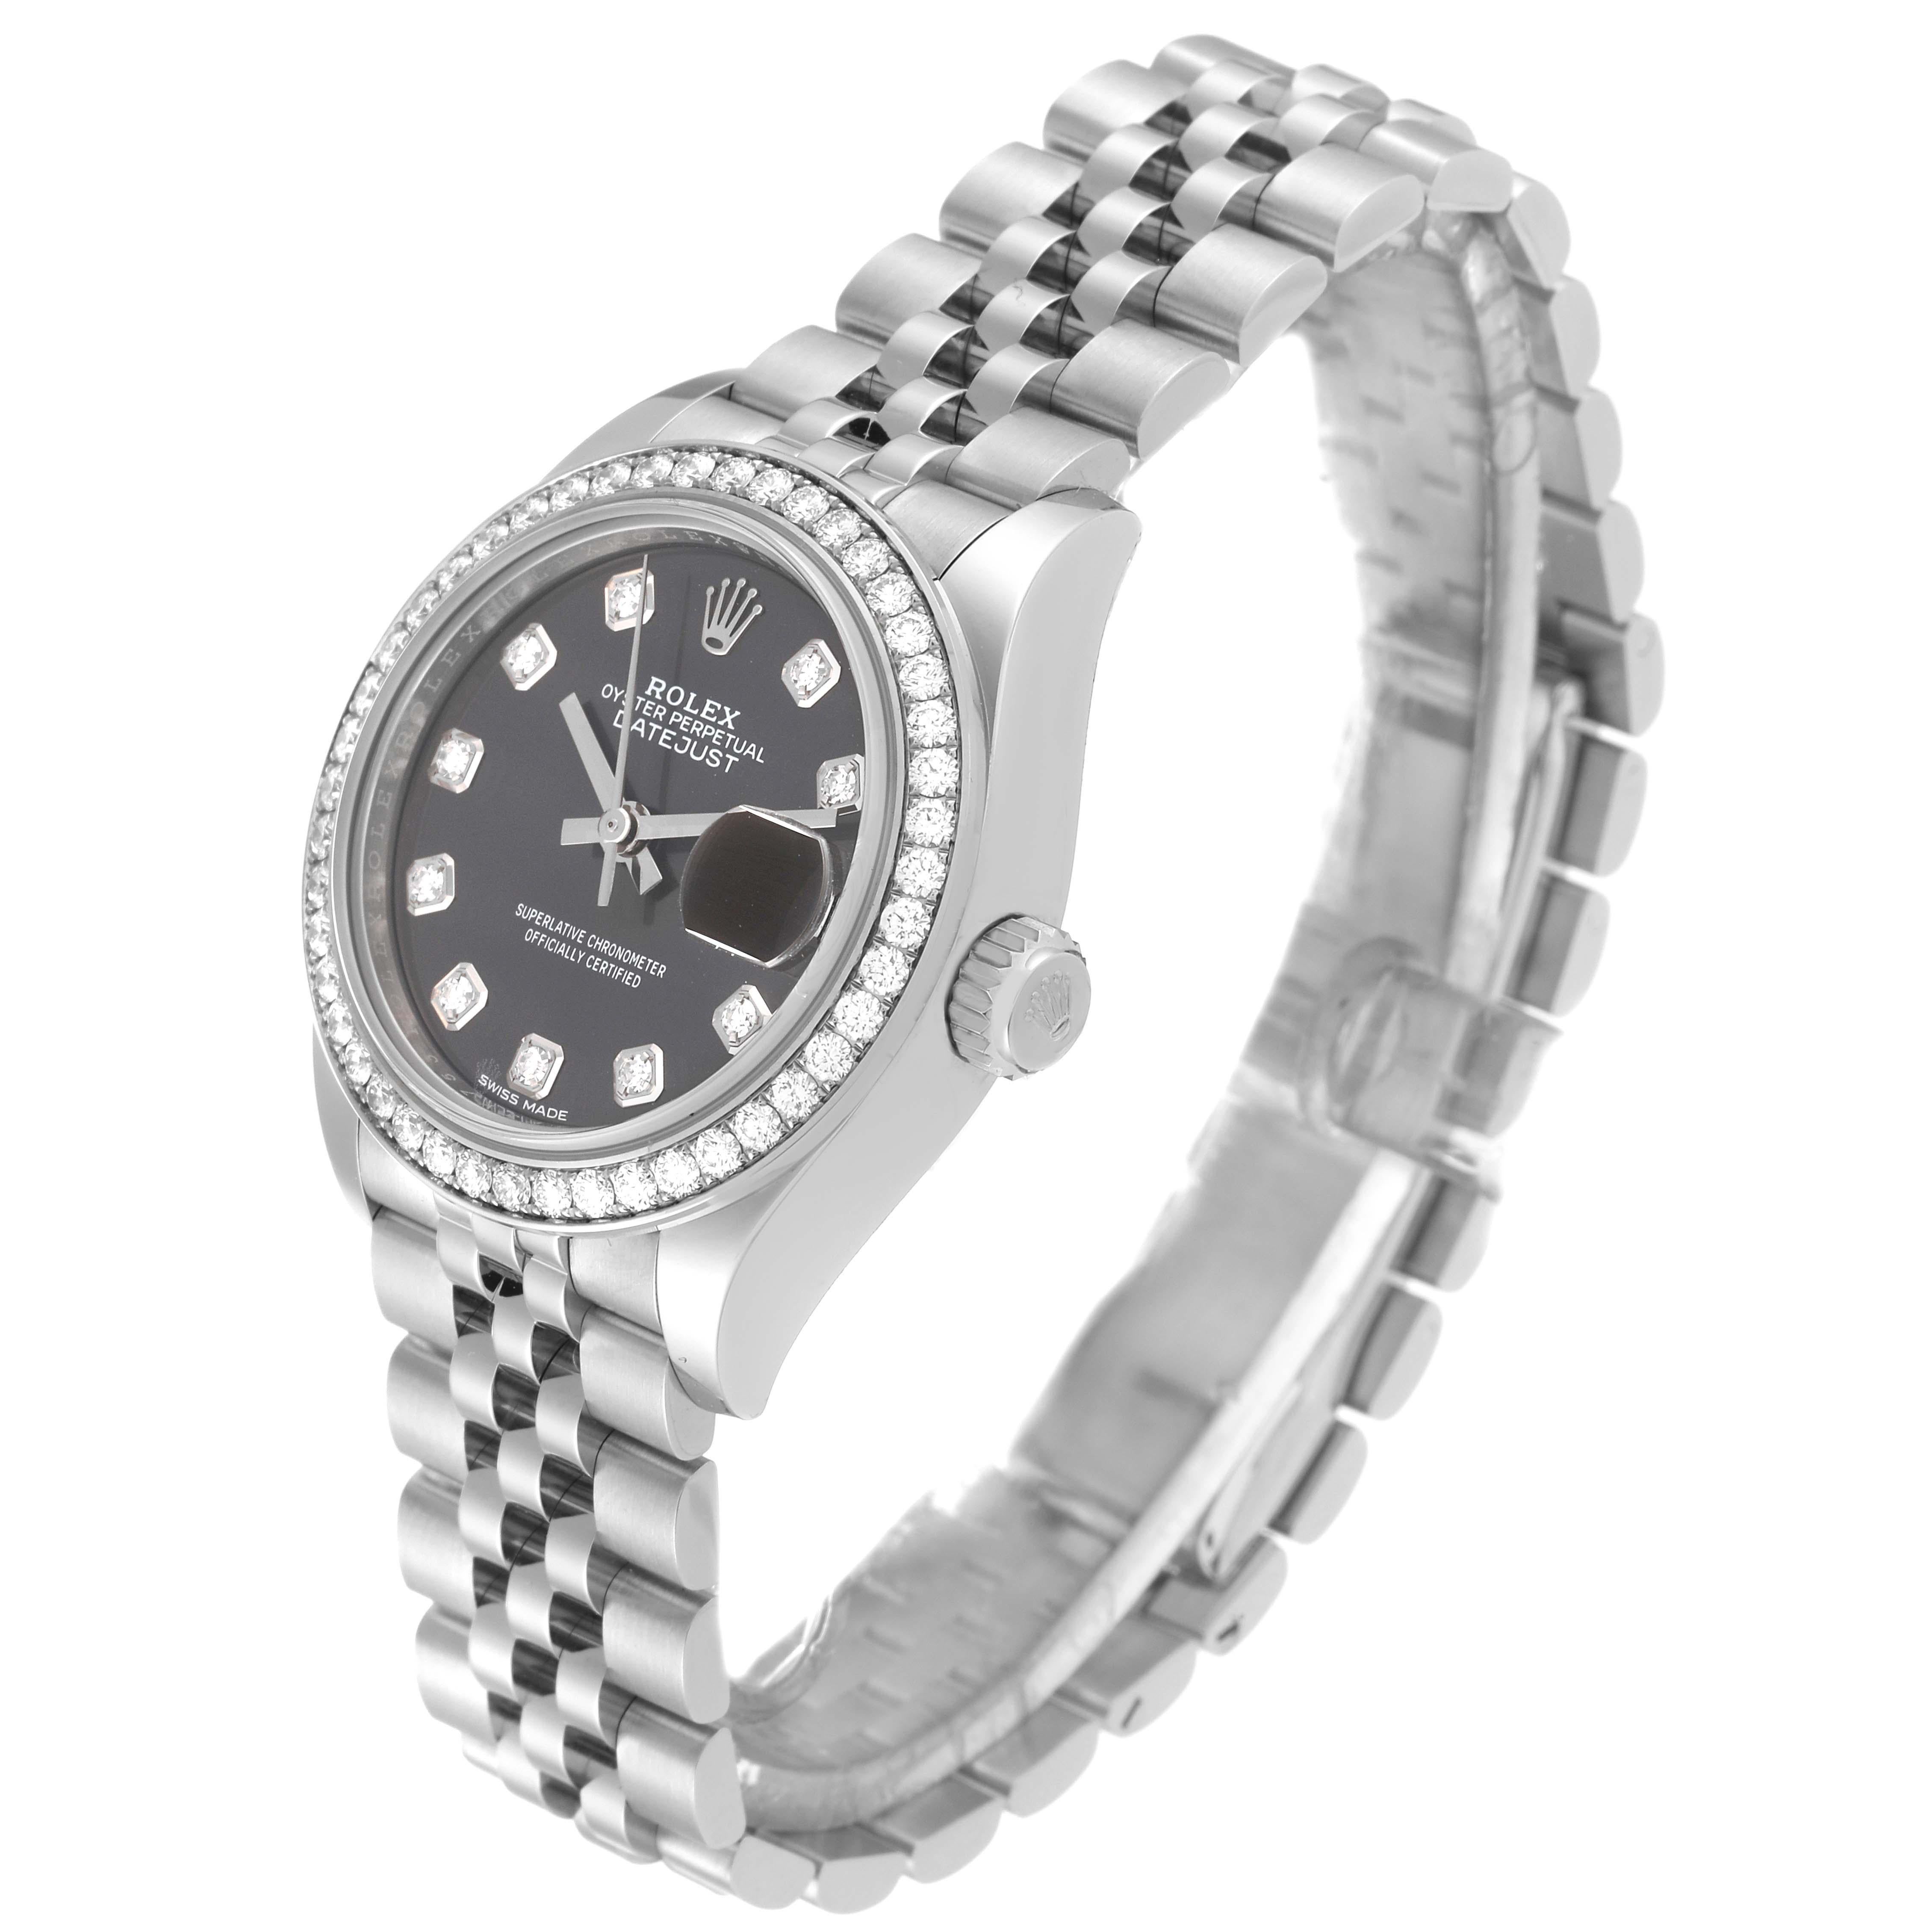 Women's Rolex Datejust Steel White Gold Grey Dial Diamond Ladies Watch 279384 Box Card For Sale